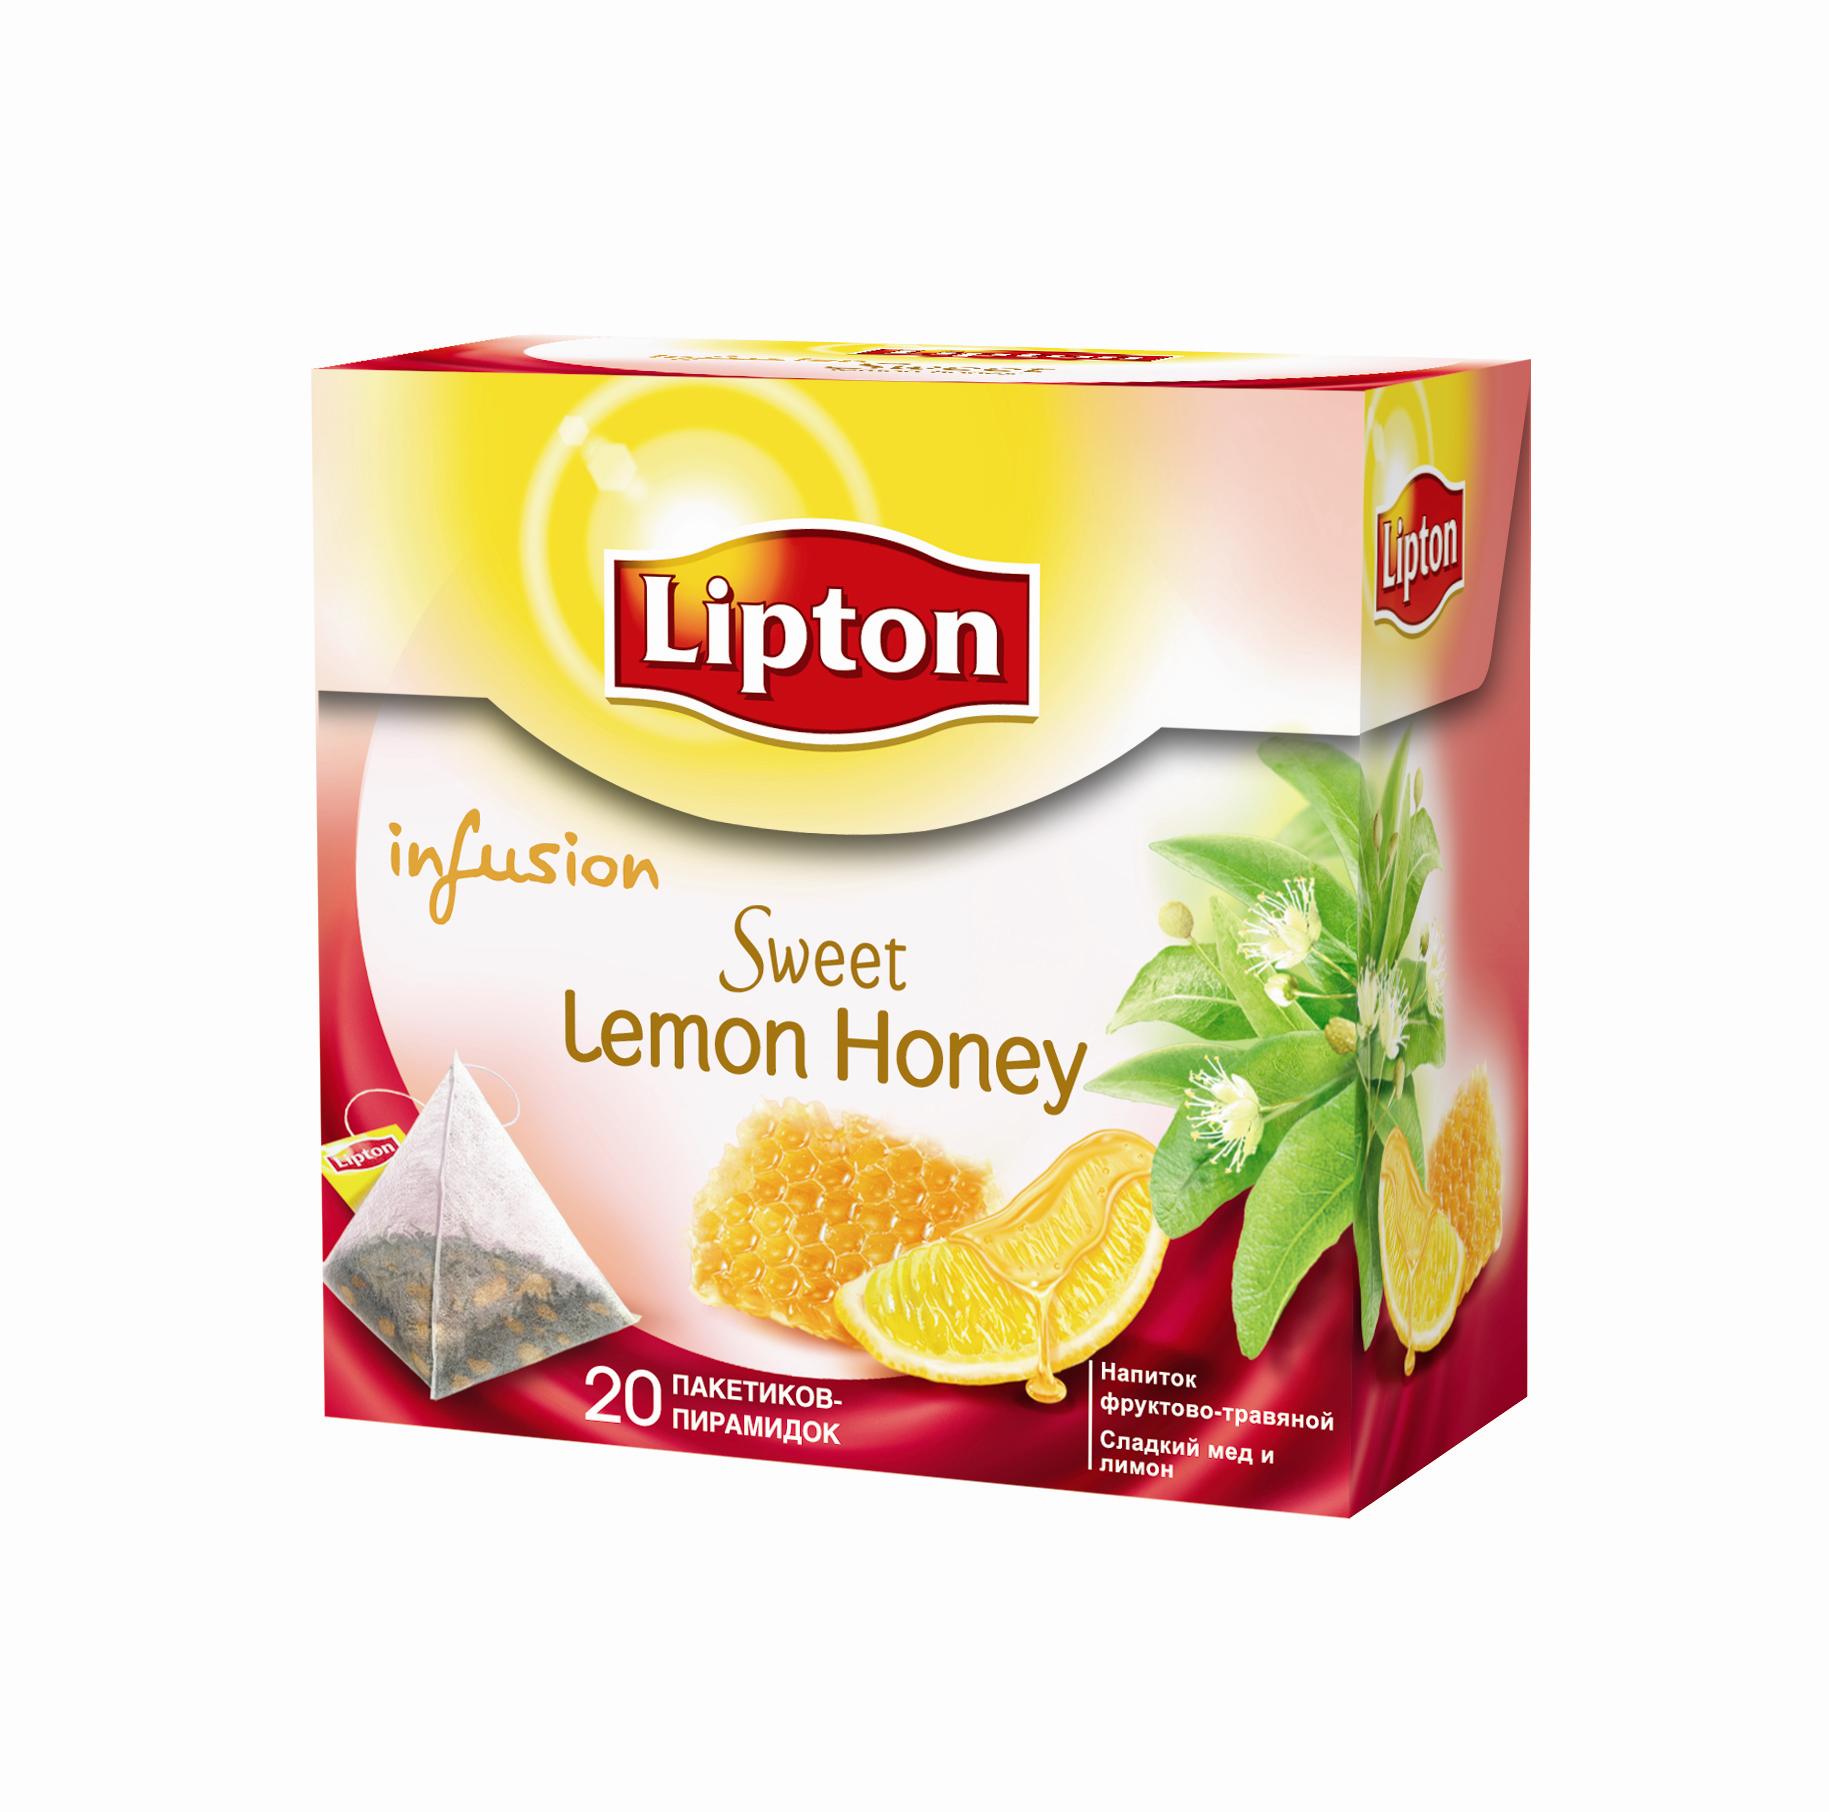 Липтон дома. Чай Липтон. Липтон лимон 2л. Липтон черный чай с лимоном. Липтон лимон 200.